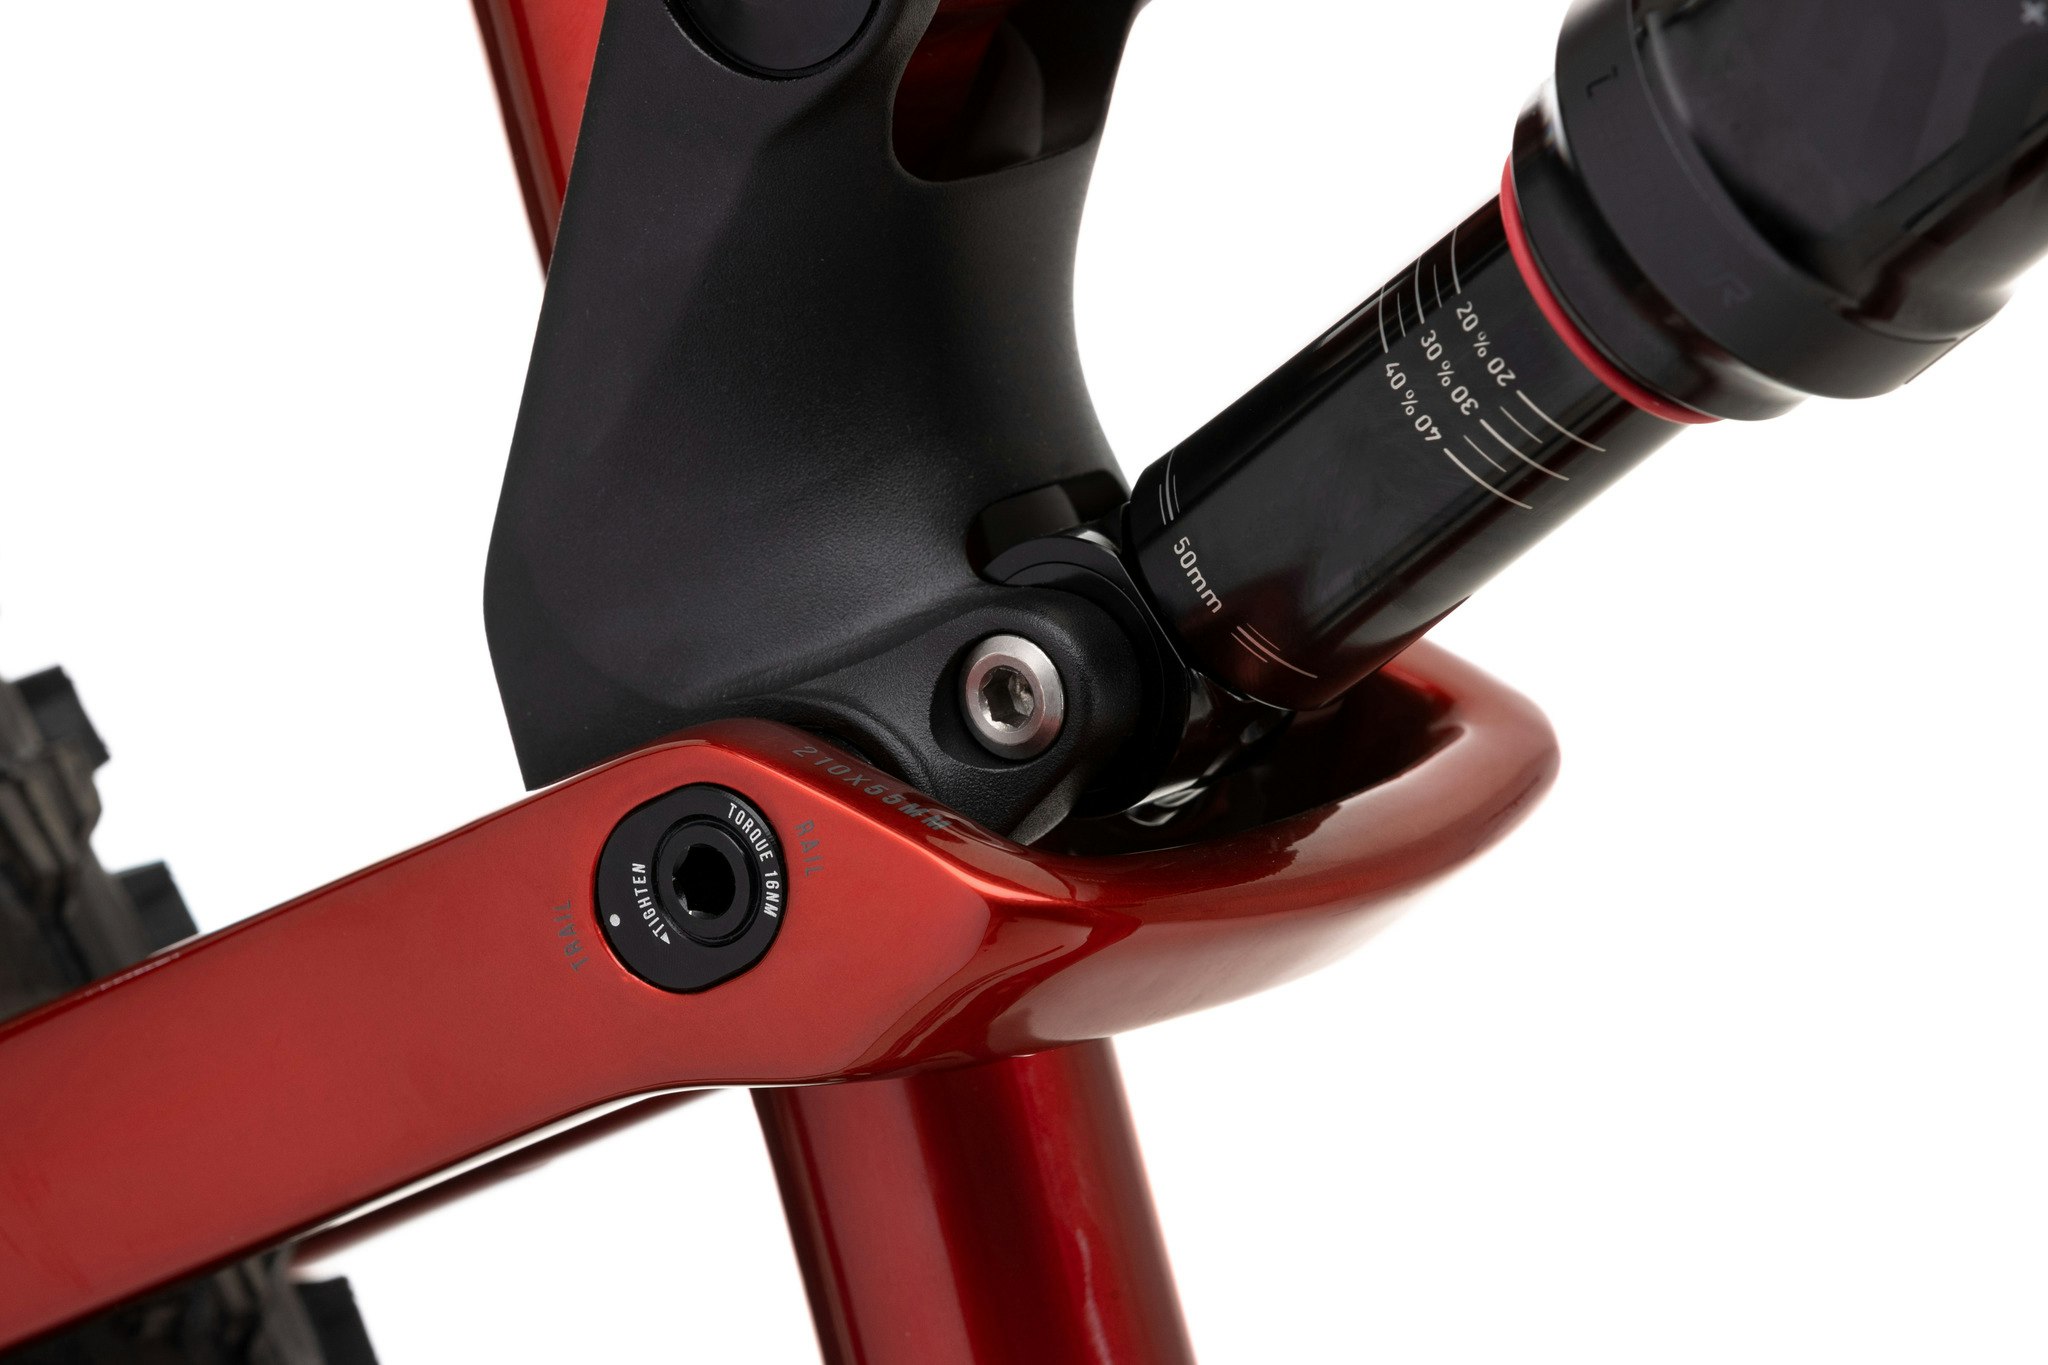 Brand-X Ascend II Dropper Seatpost - Dan's cykel o skid